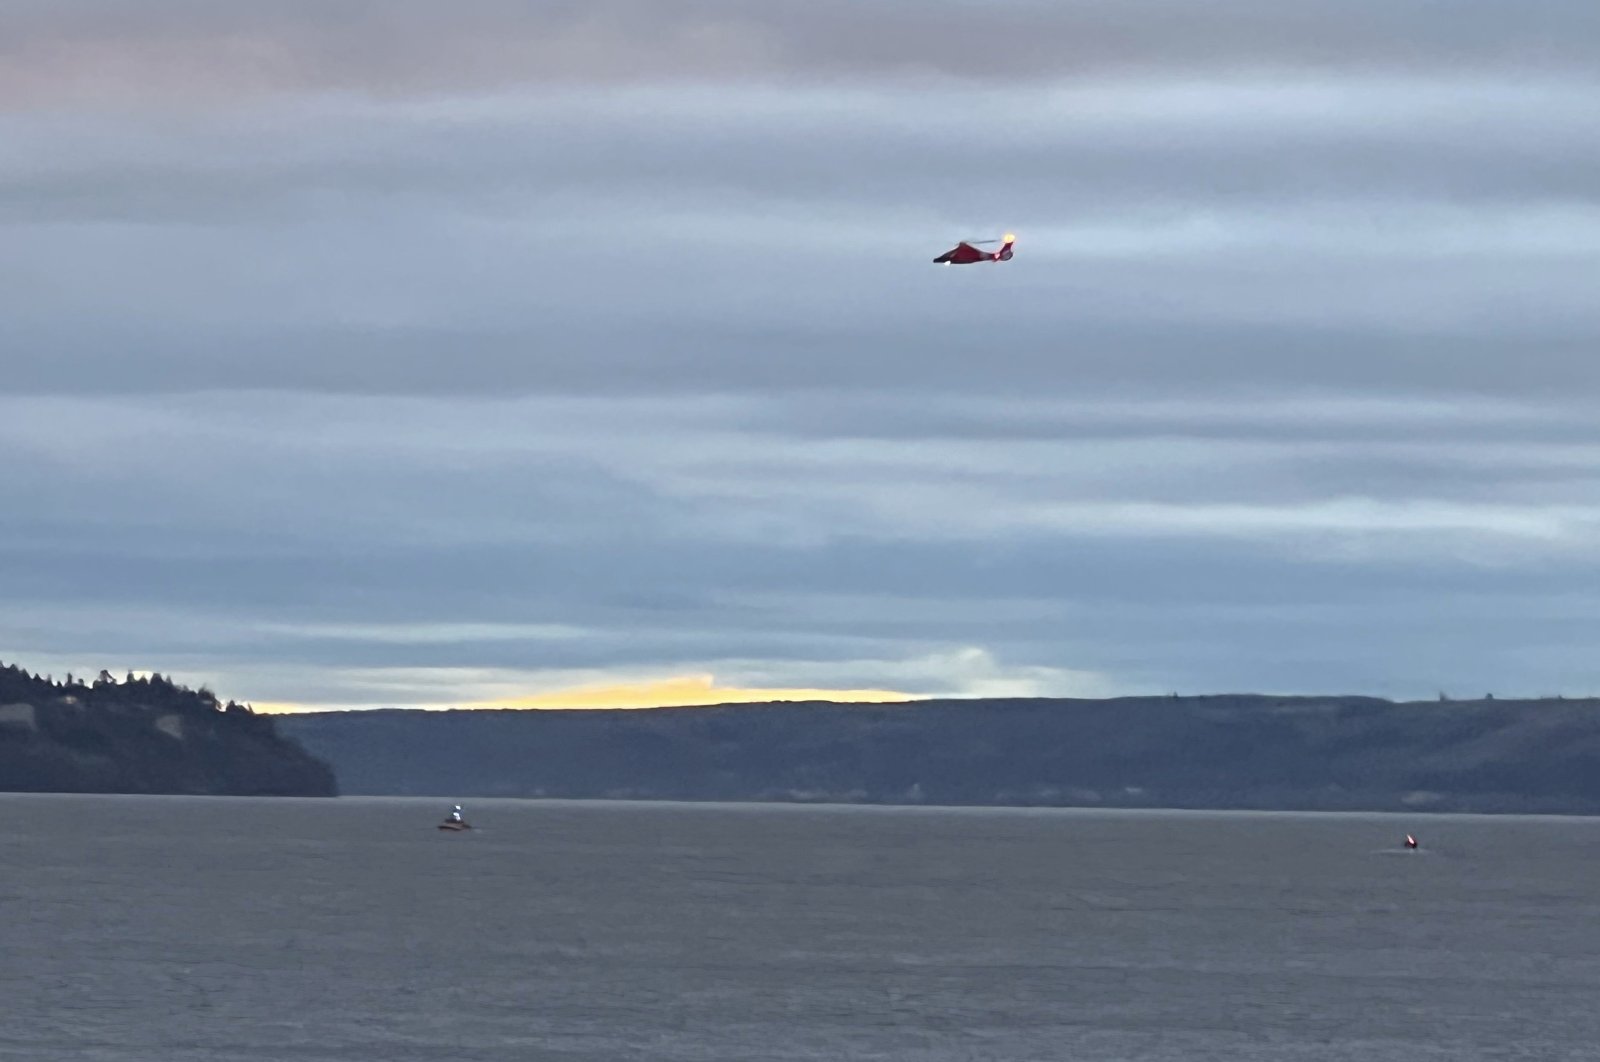 A Coast Guard helicopter searches the area where a floatplane crashed near Whidbey Island, Washington, U.S., Sept. 4, 2022. (Courtney Riffkin/The Seattle Times via AP)